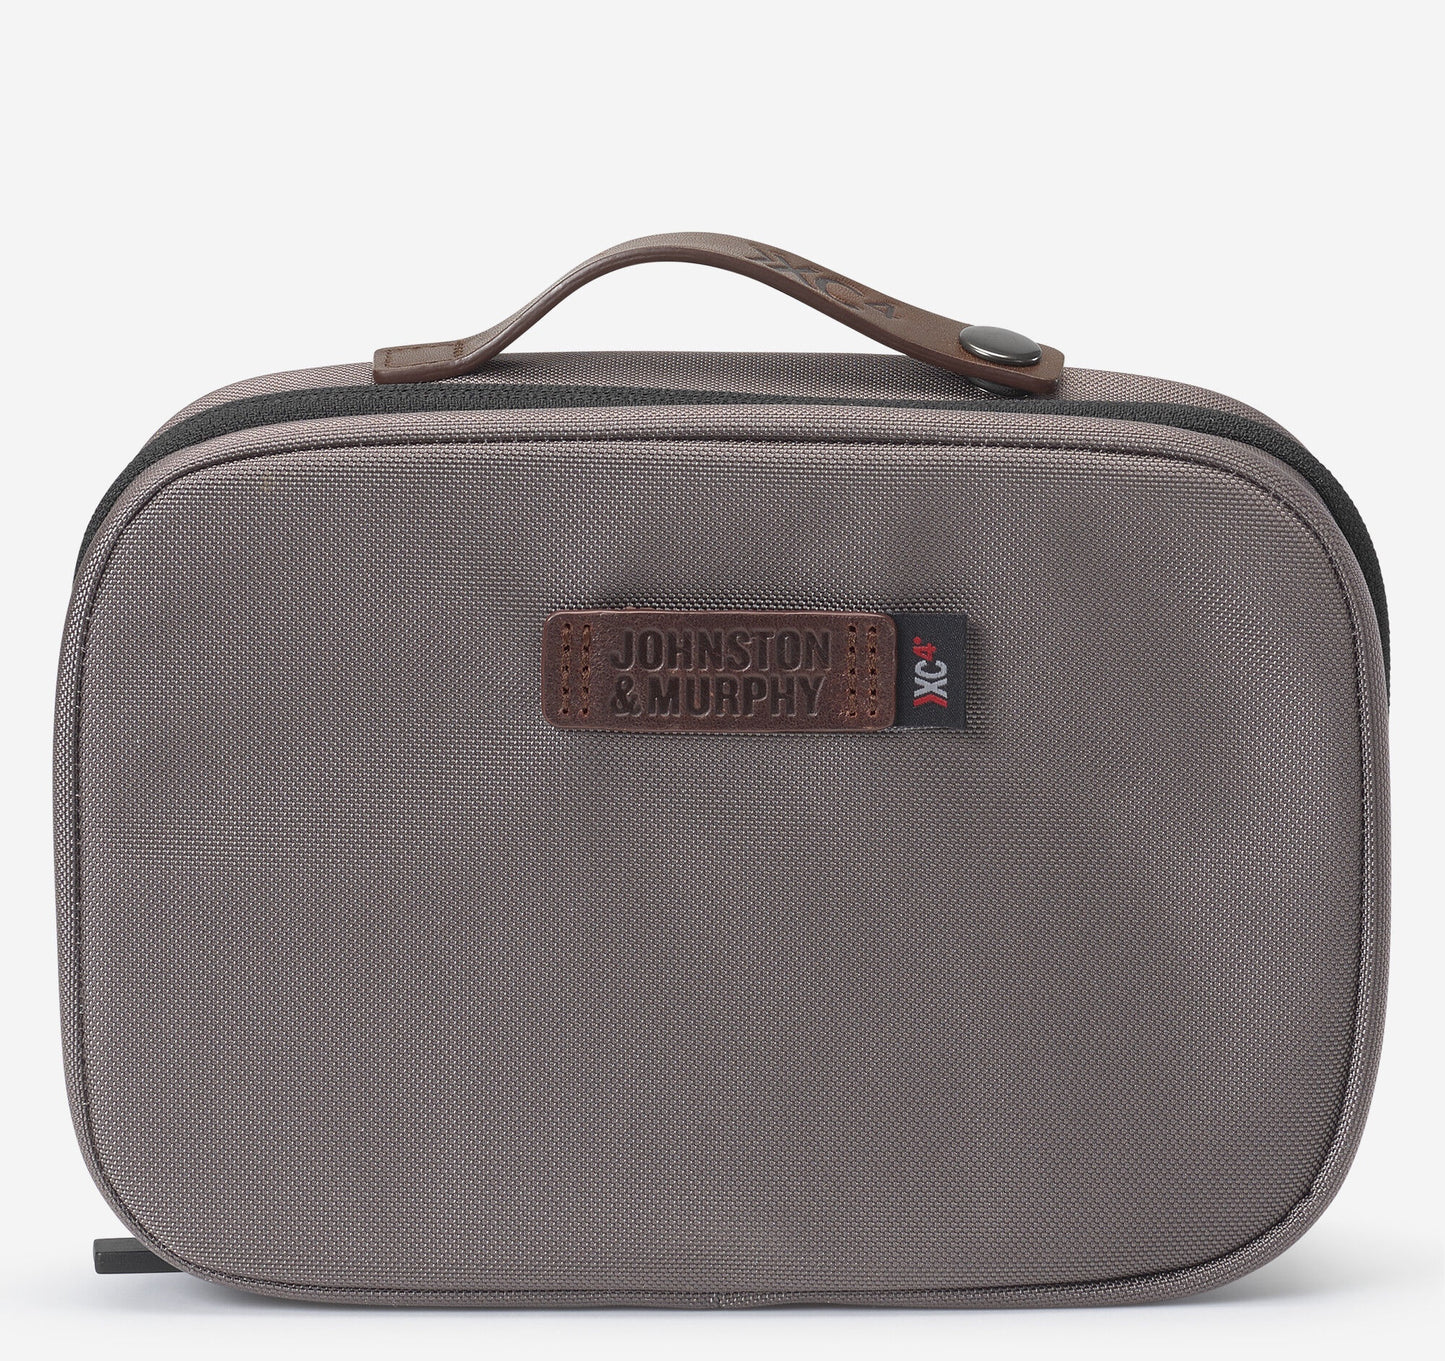 Johnston & Murphy XC4 Toiletry Kit in Grey Nylon/Brown Leather